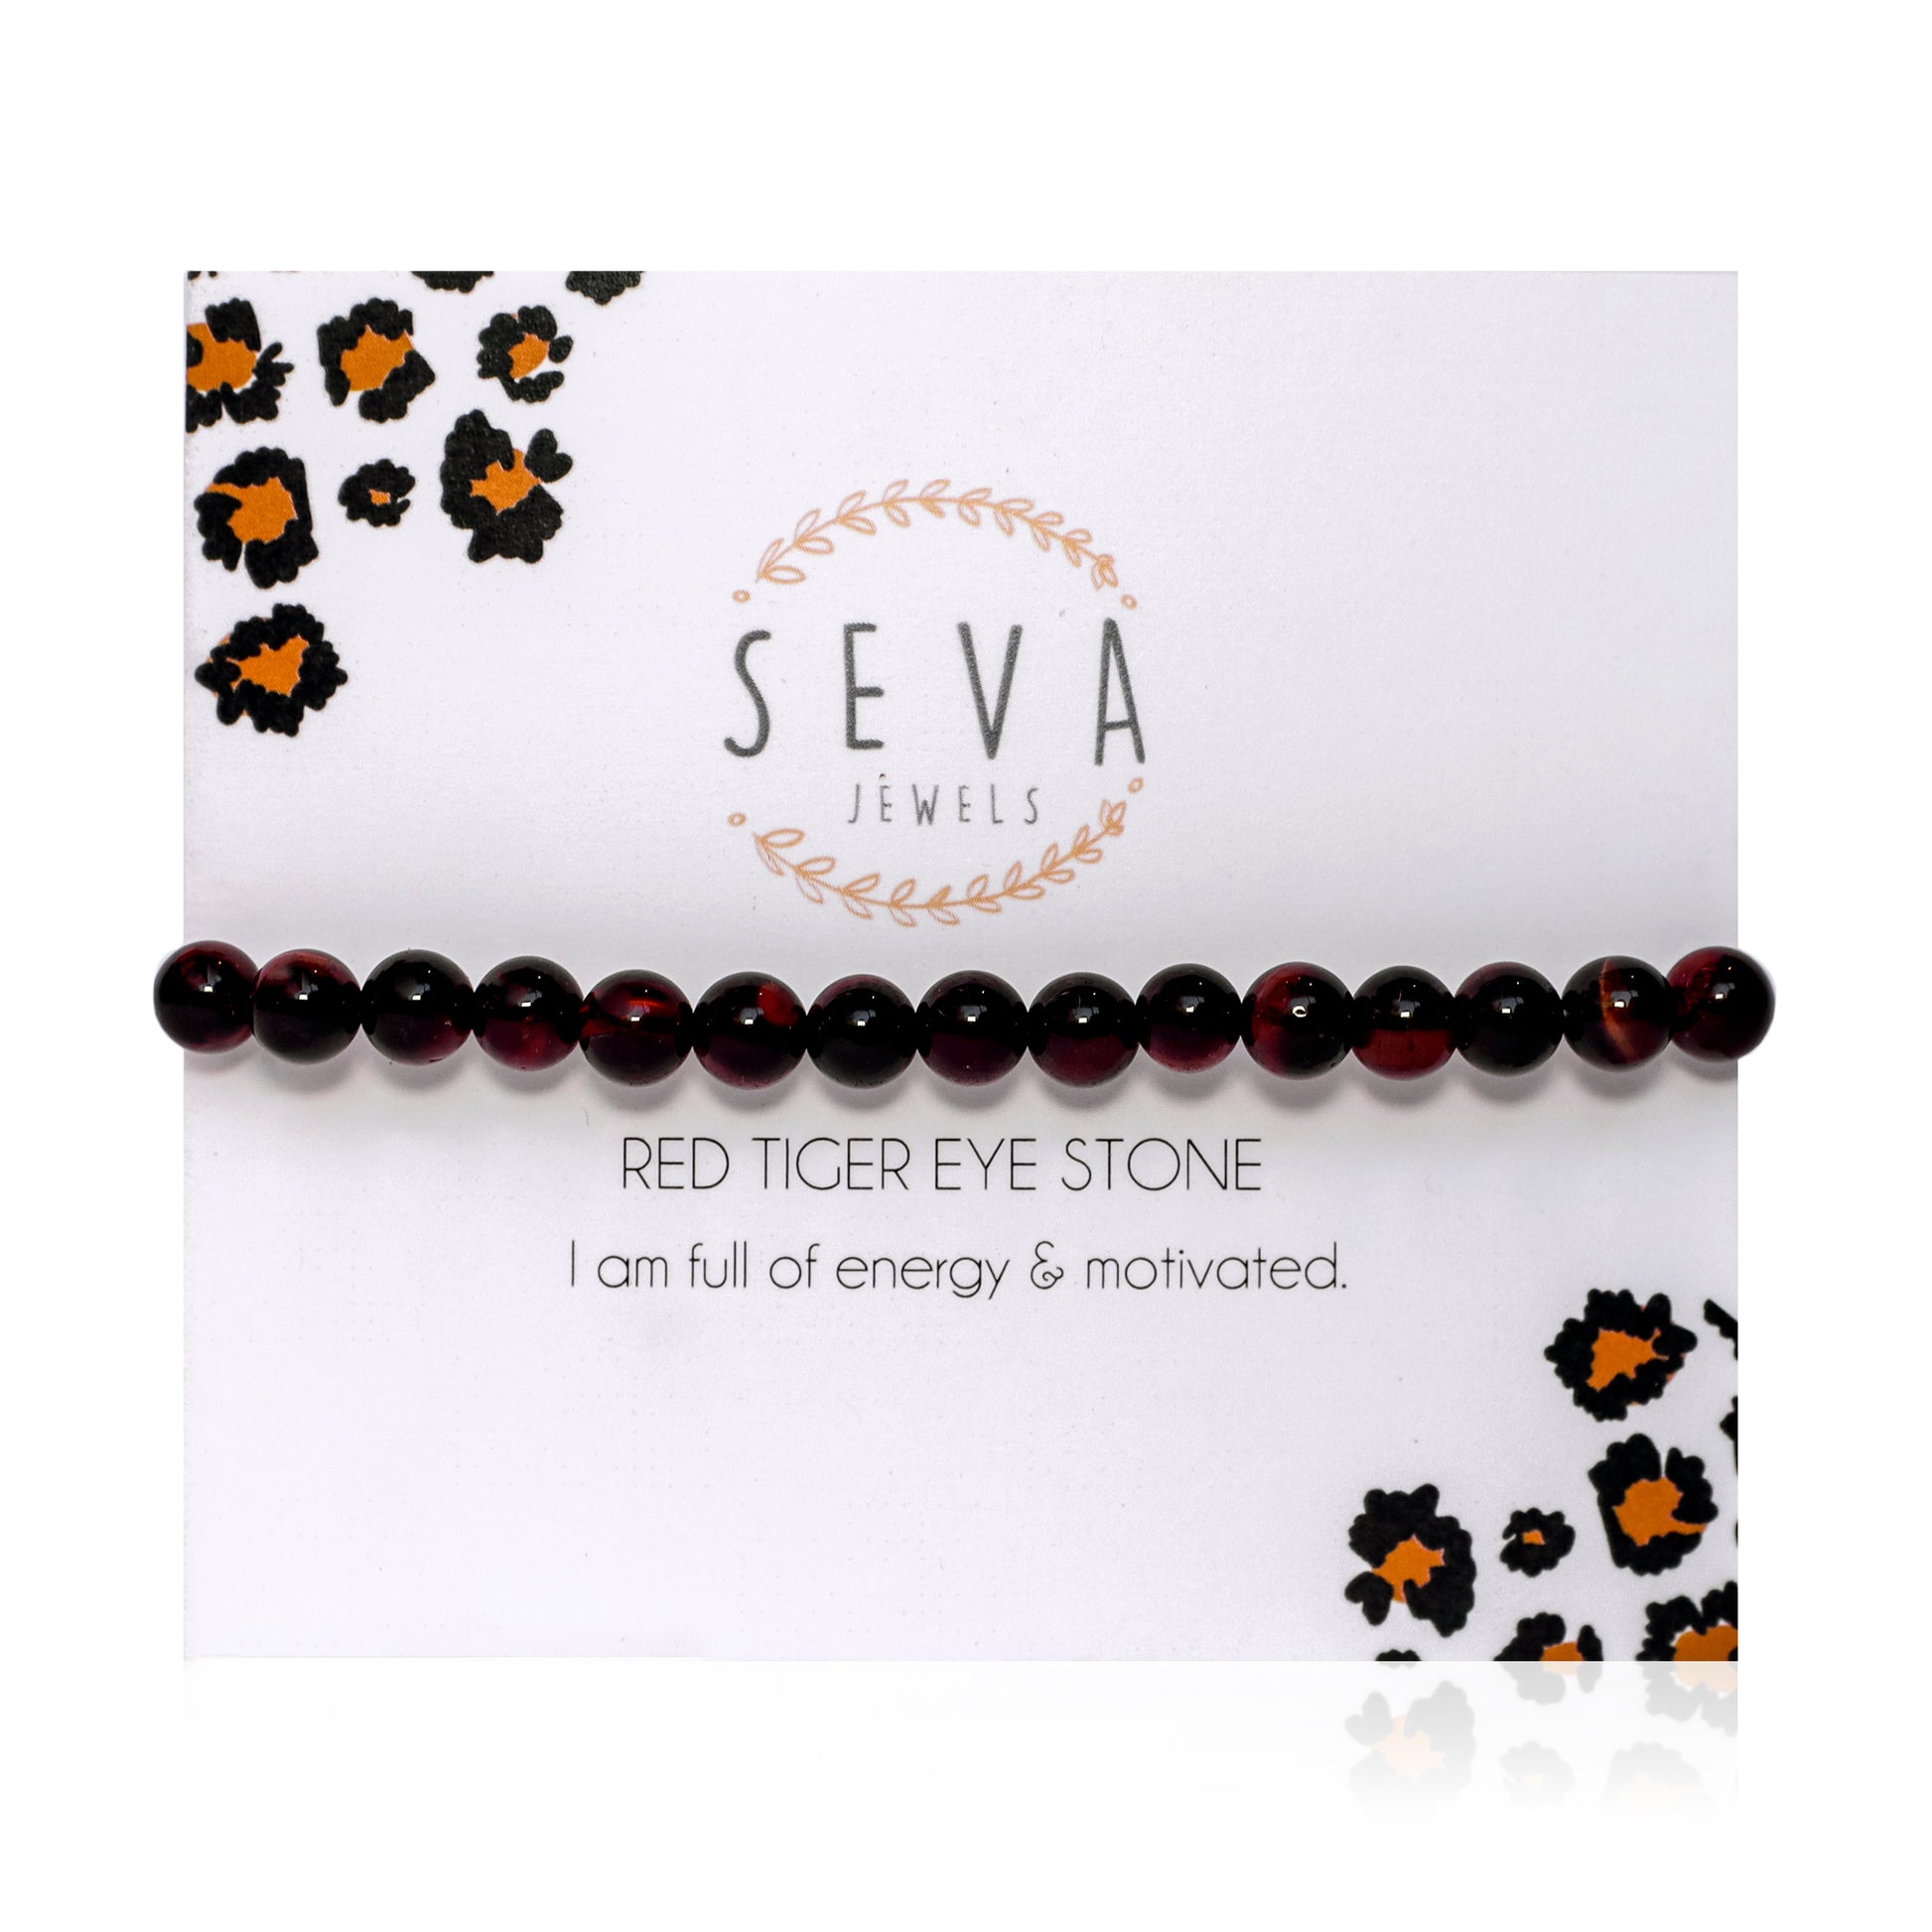 Red Tiger Eye "Safari" Bracelet front card